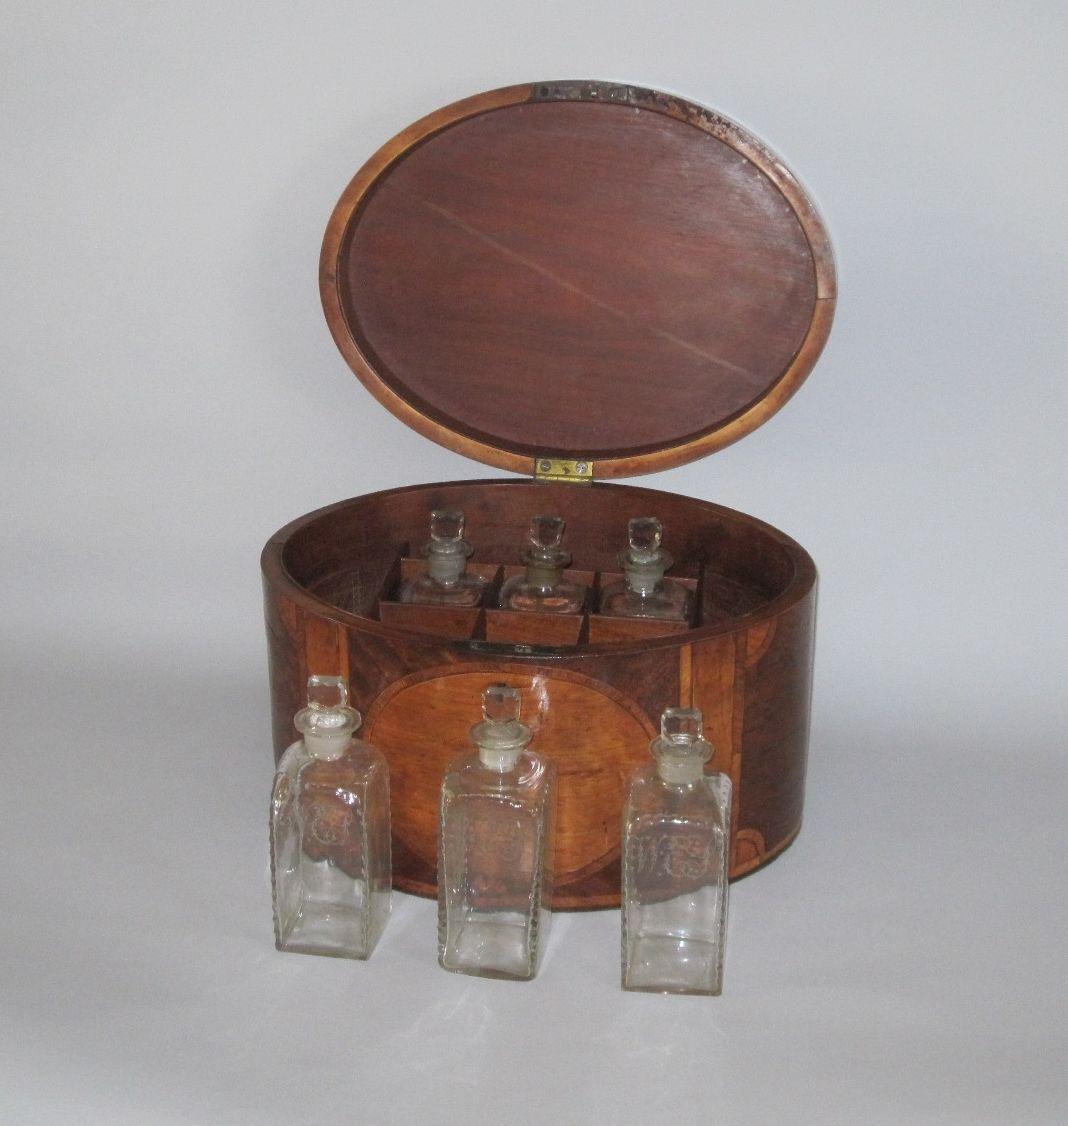 RARE SATINWOOD DECANTER BOX WITH ORIGINAL GLASS DECANTERS. CIRCA 1780